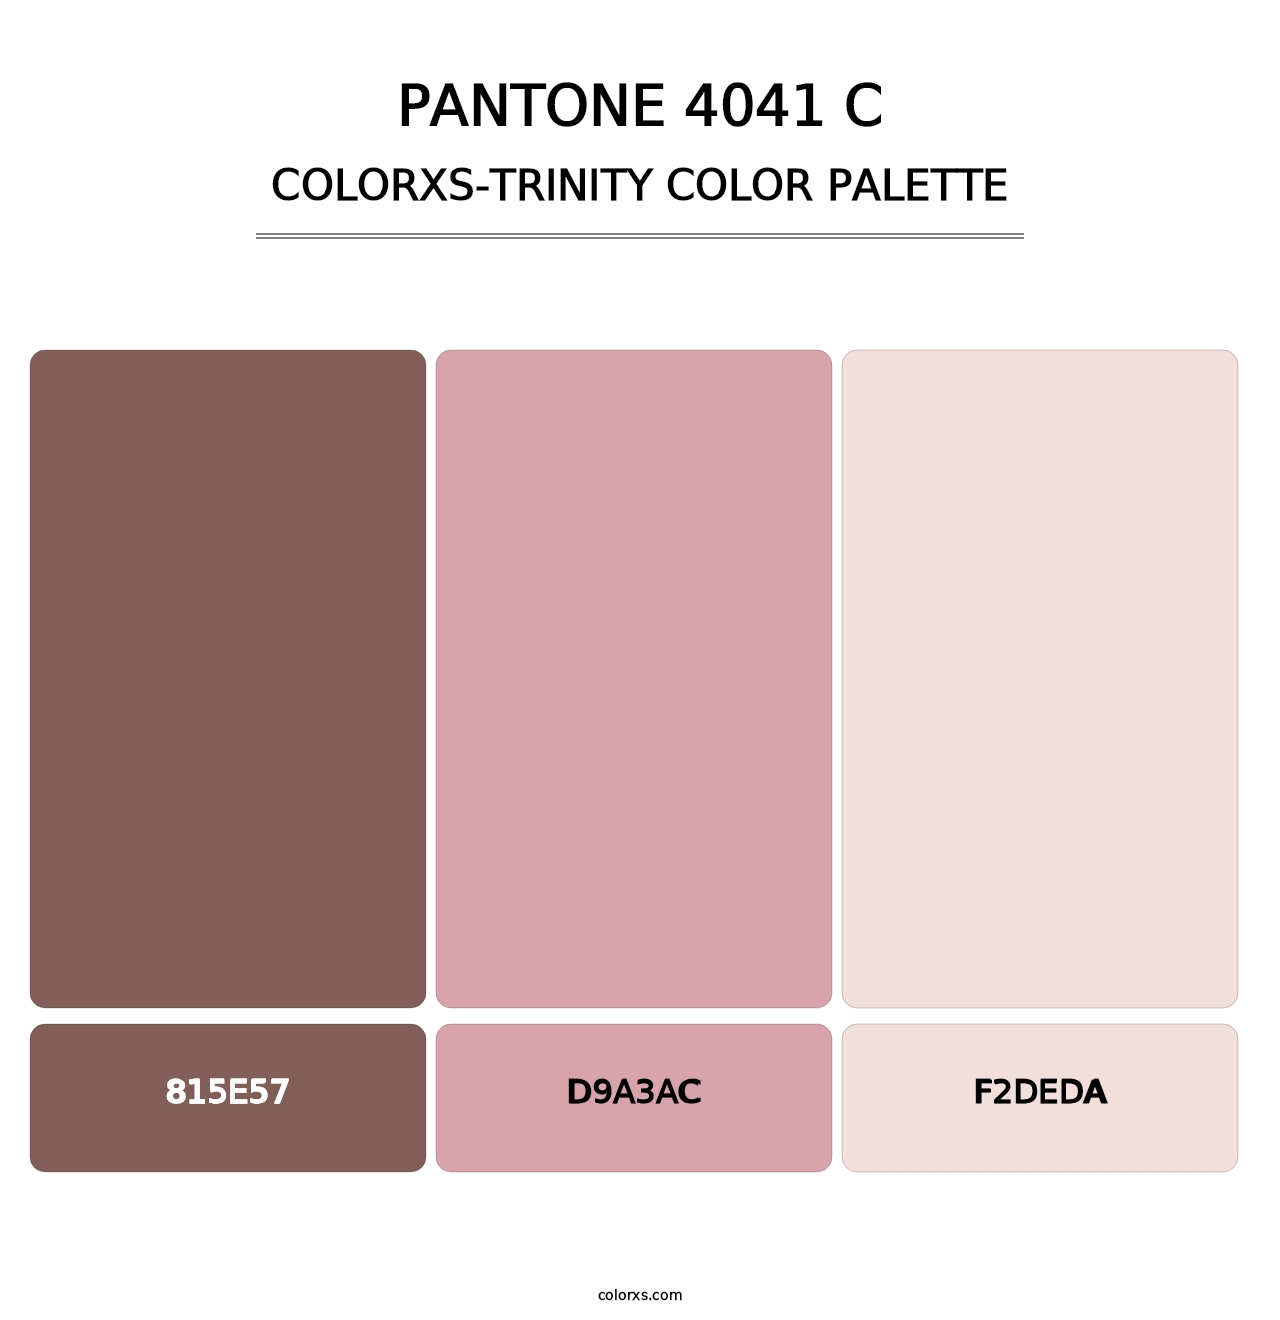 PANTONE 4041 C - Colorxs Trinity Palette